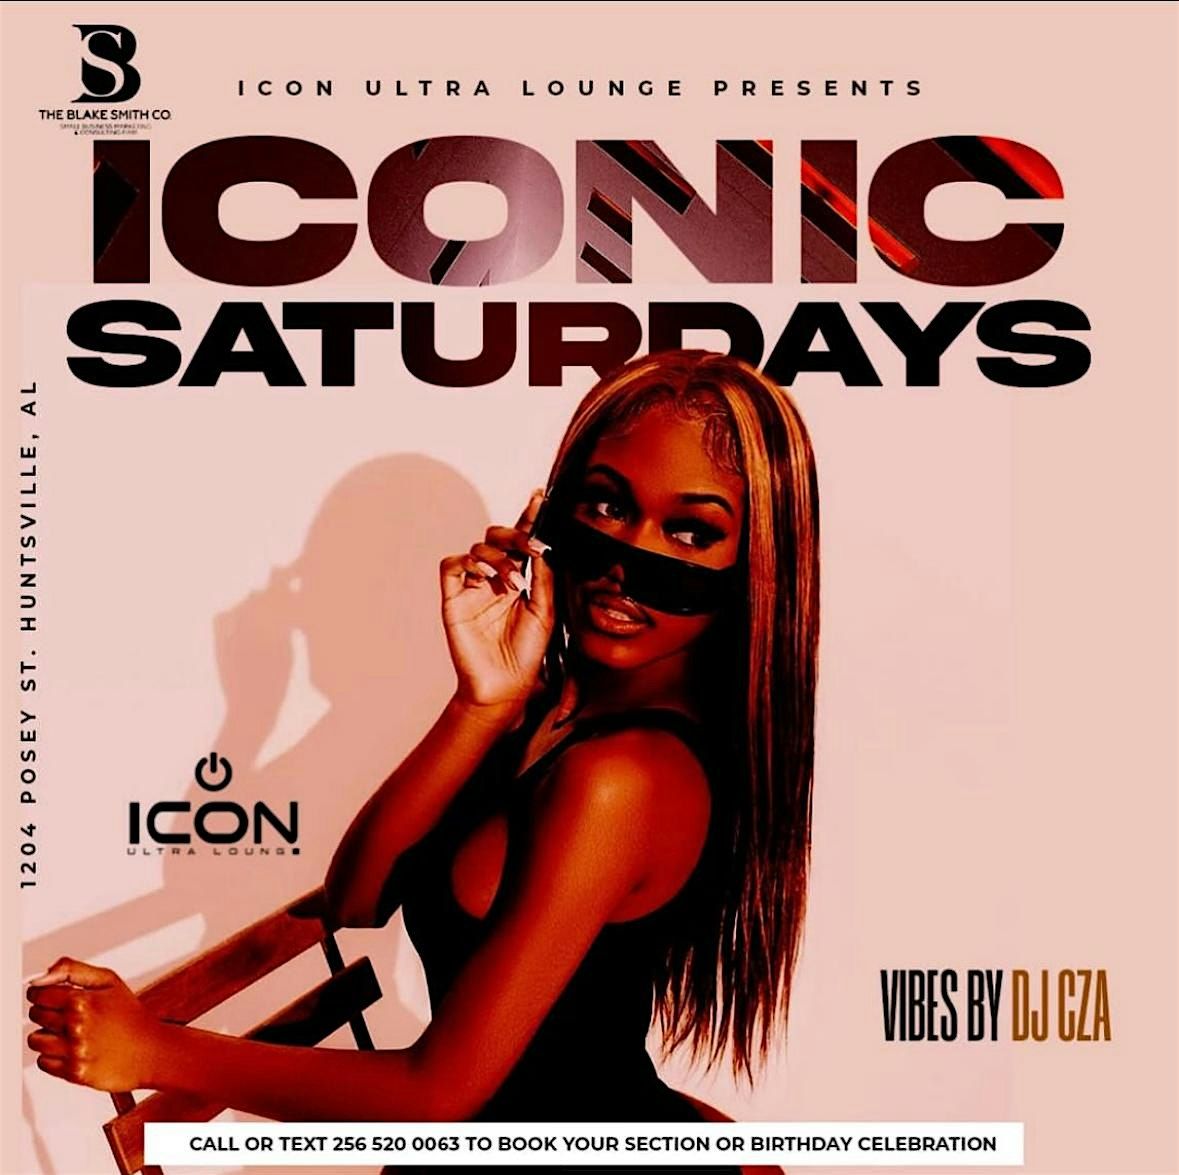 Iconic Saturdays at Icon Ultra Lounge